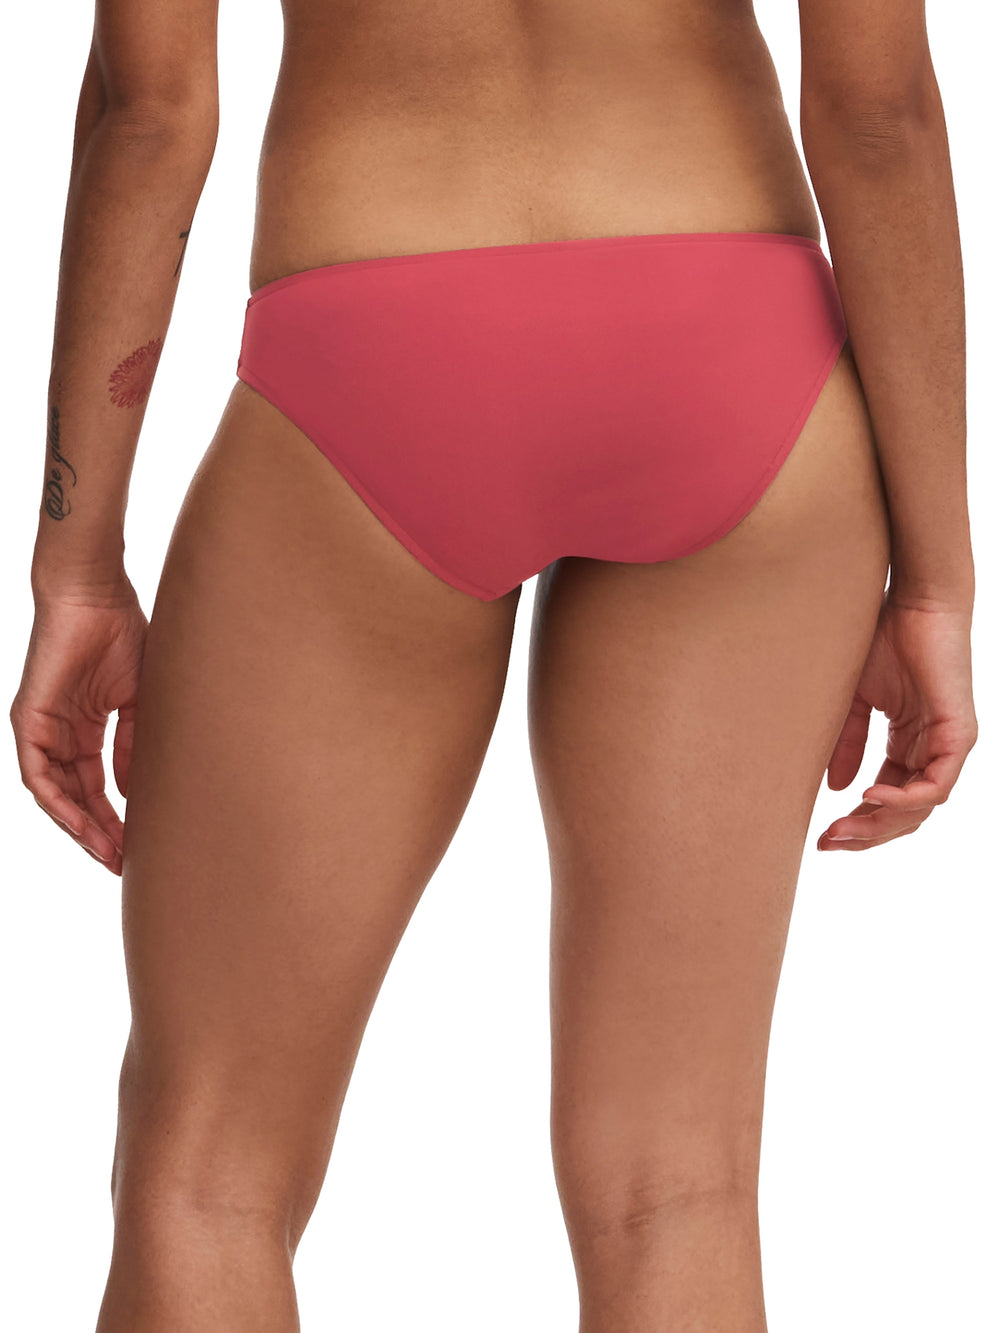 Chantelle Swimwear Inspire Brief - Granatroter Bikini-Slip Chantelle